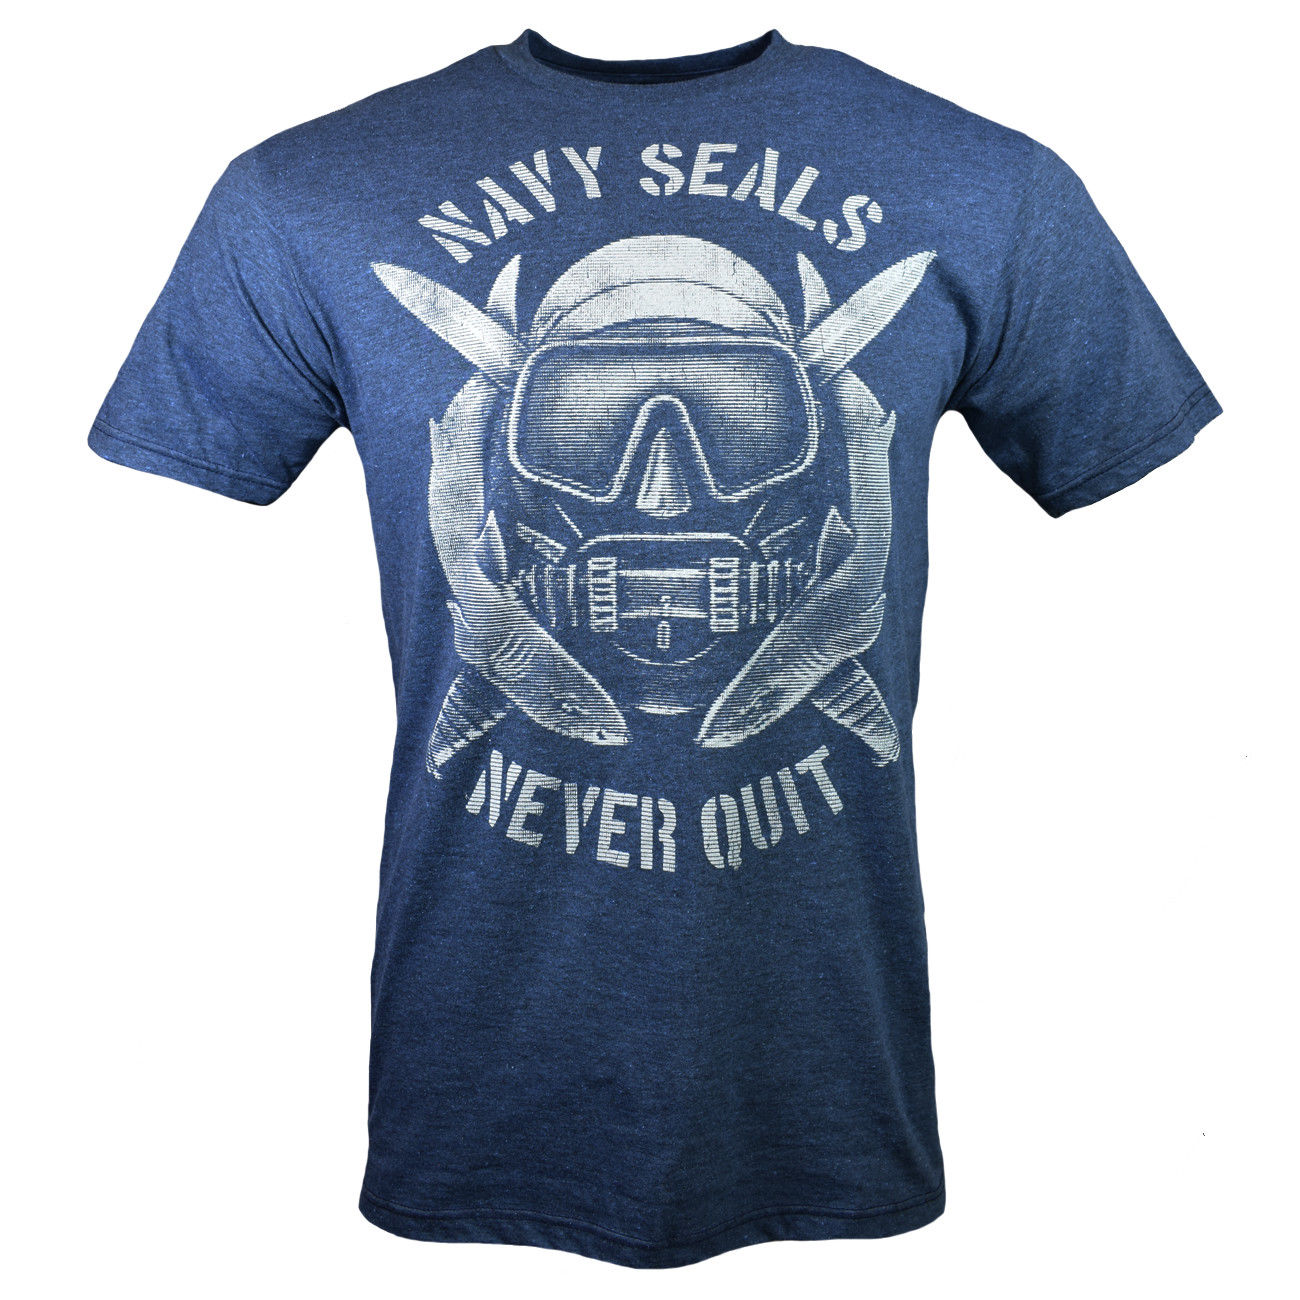 Navy Seals Never Quit Men's Graphic T-Shirt